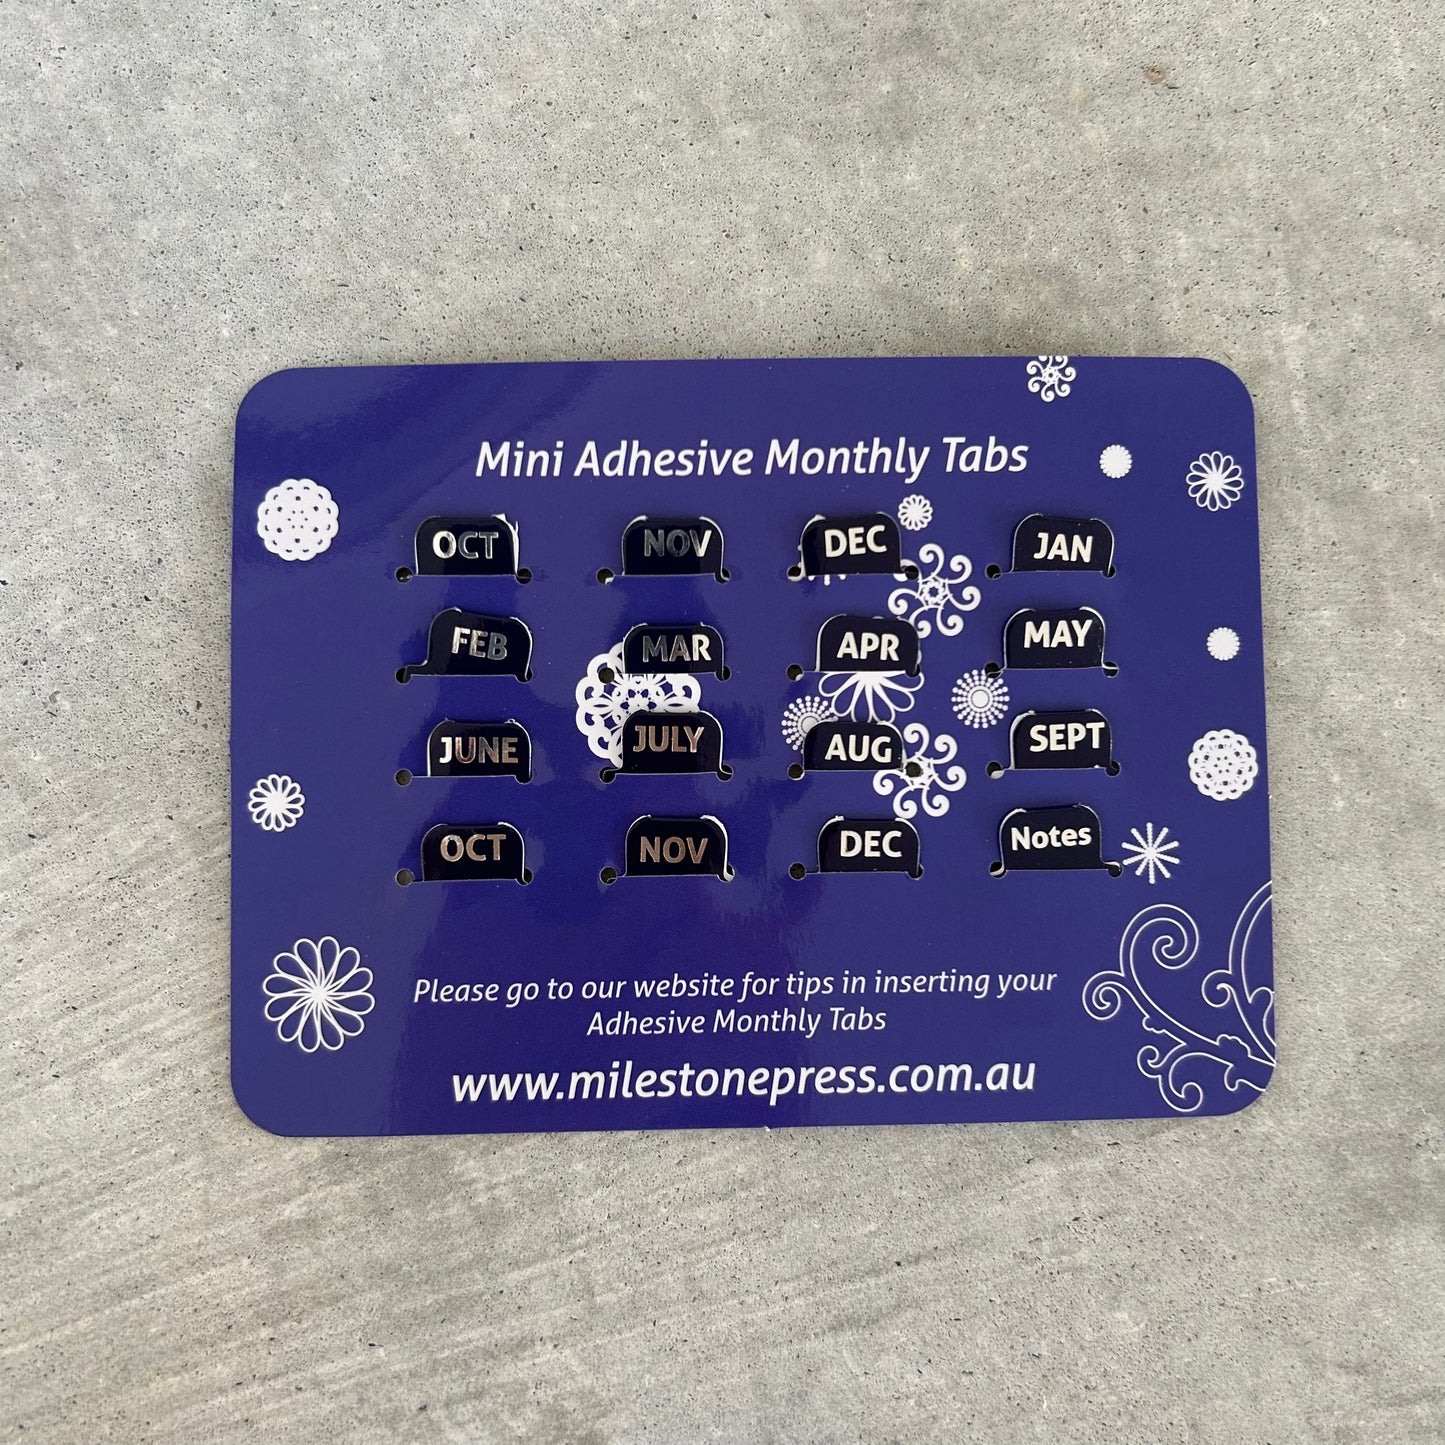 Mini Adhesive Monthly Tabs.